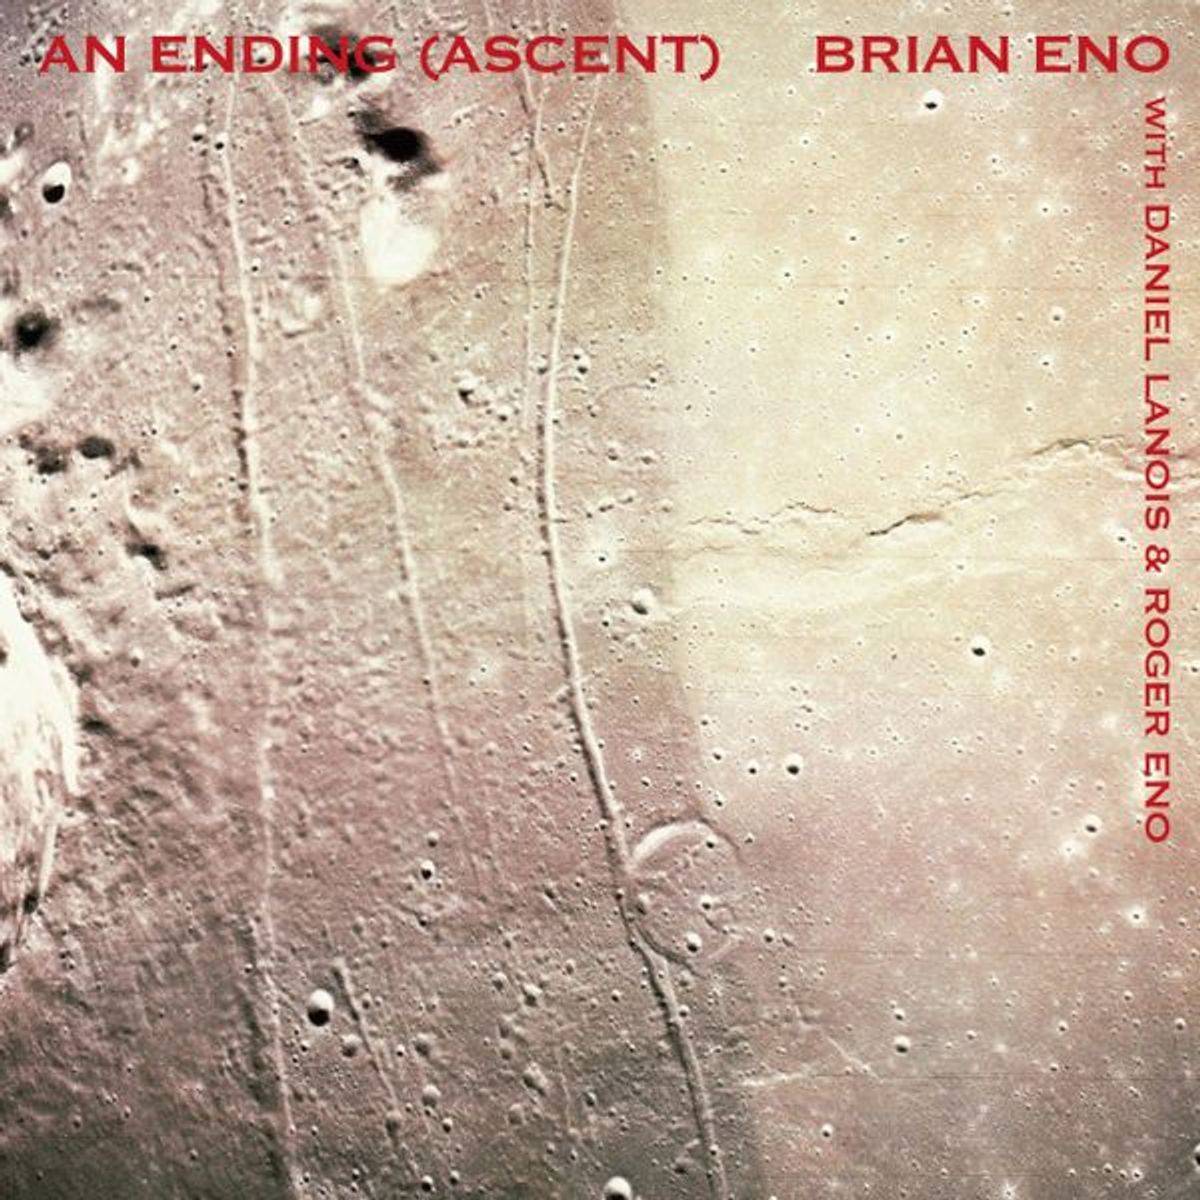 #BrianEno - Brian Eno - An Ending (Ascent) (1983)